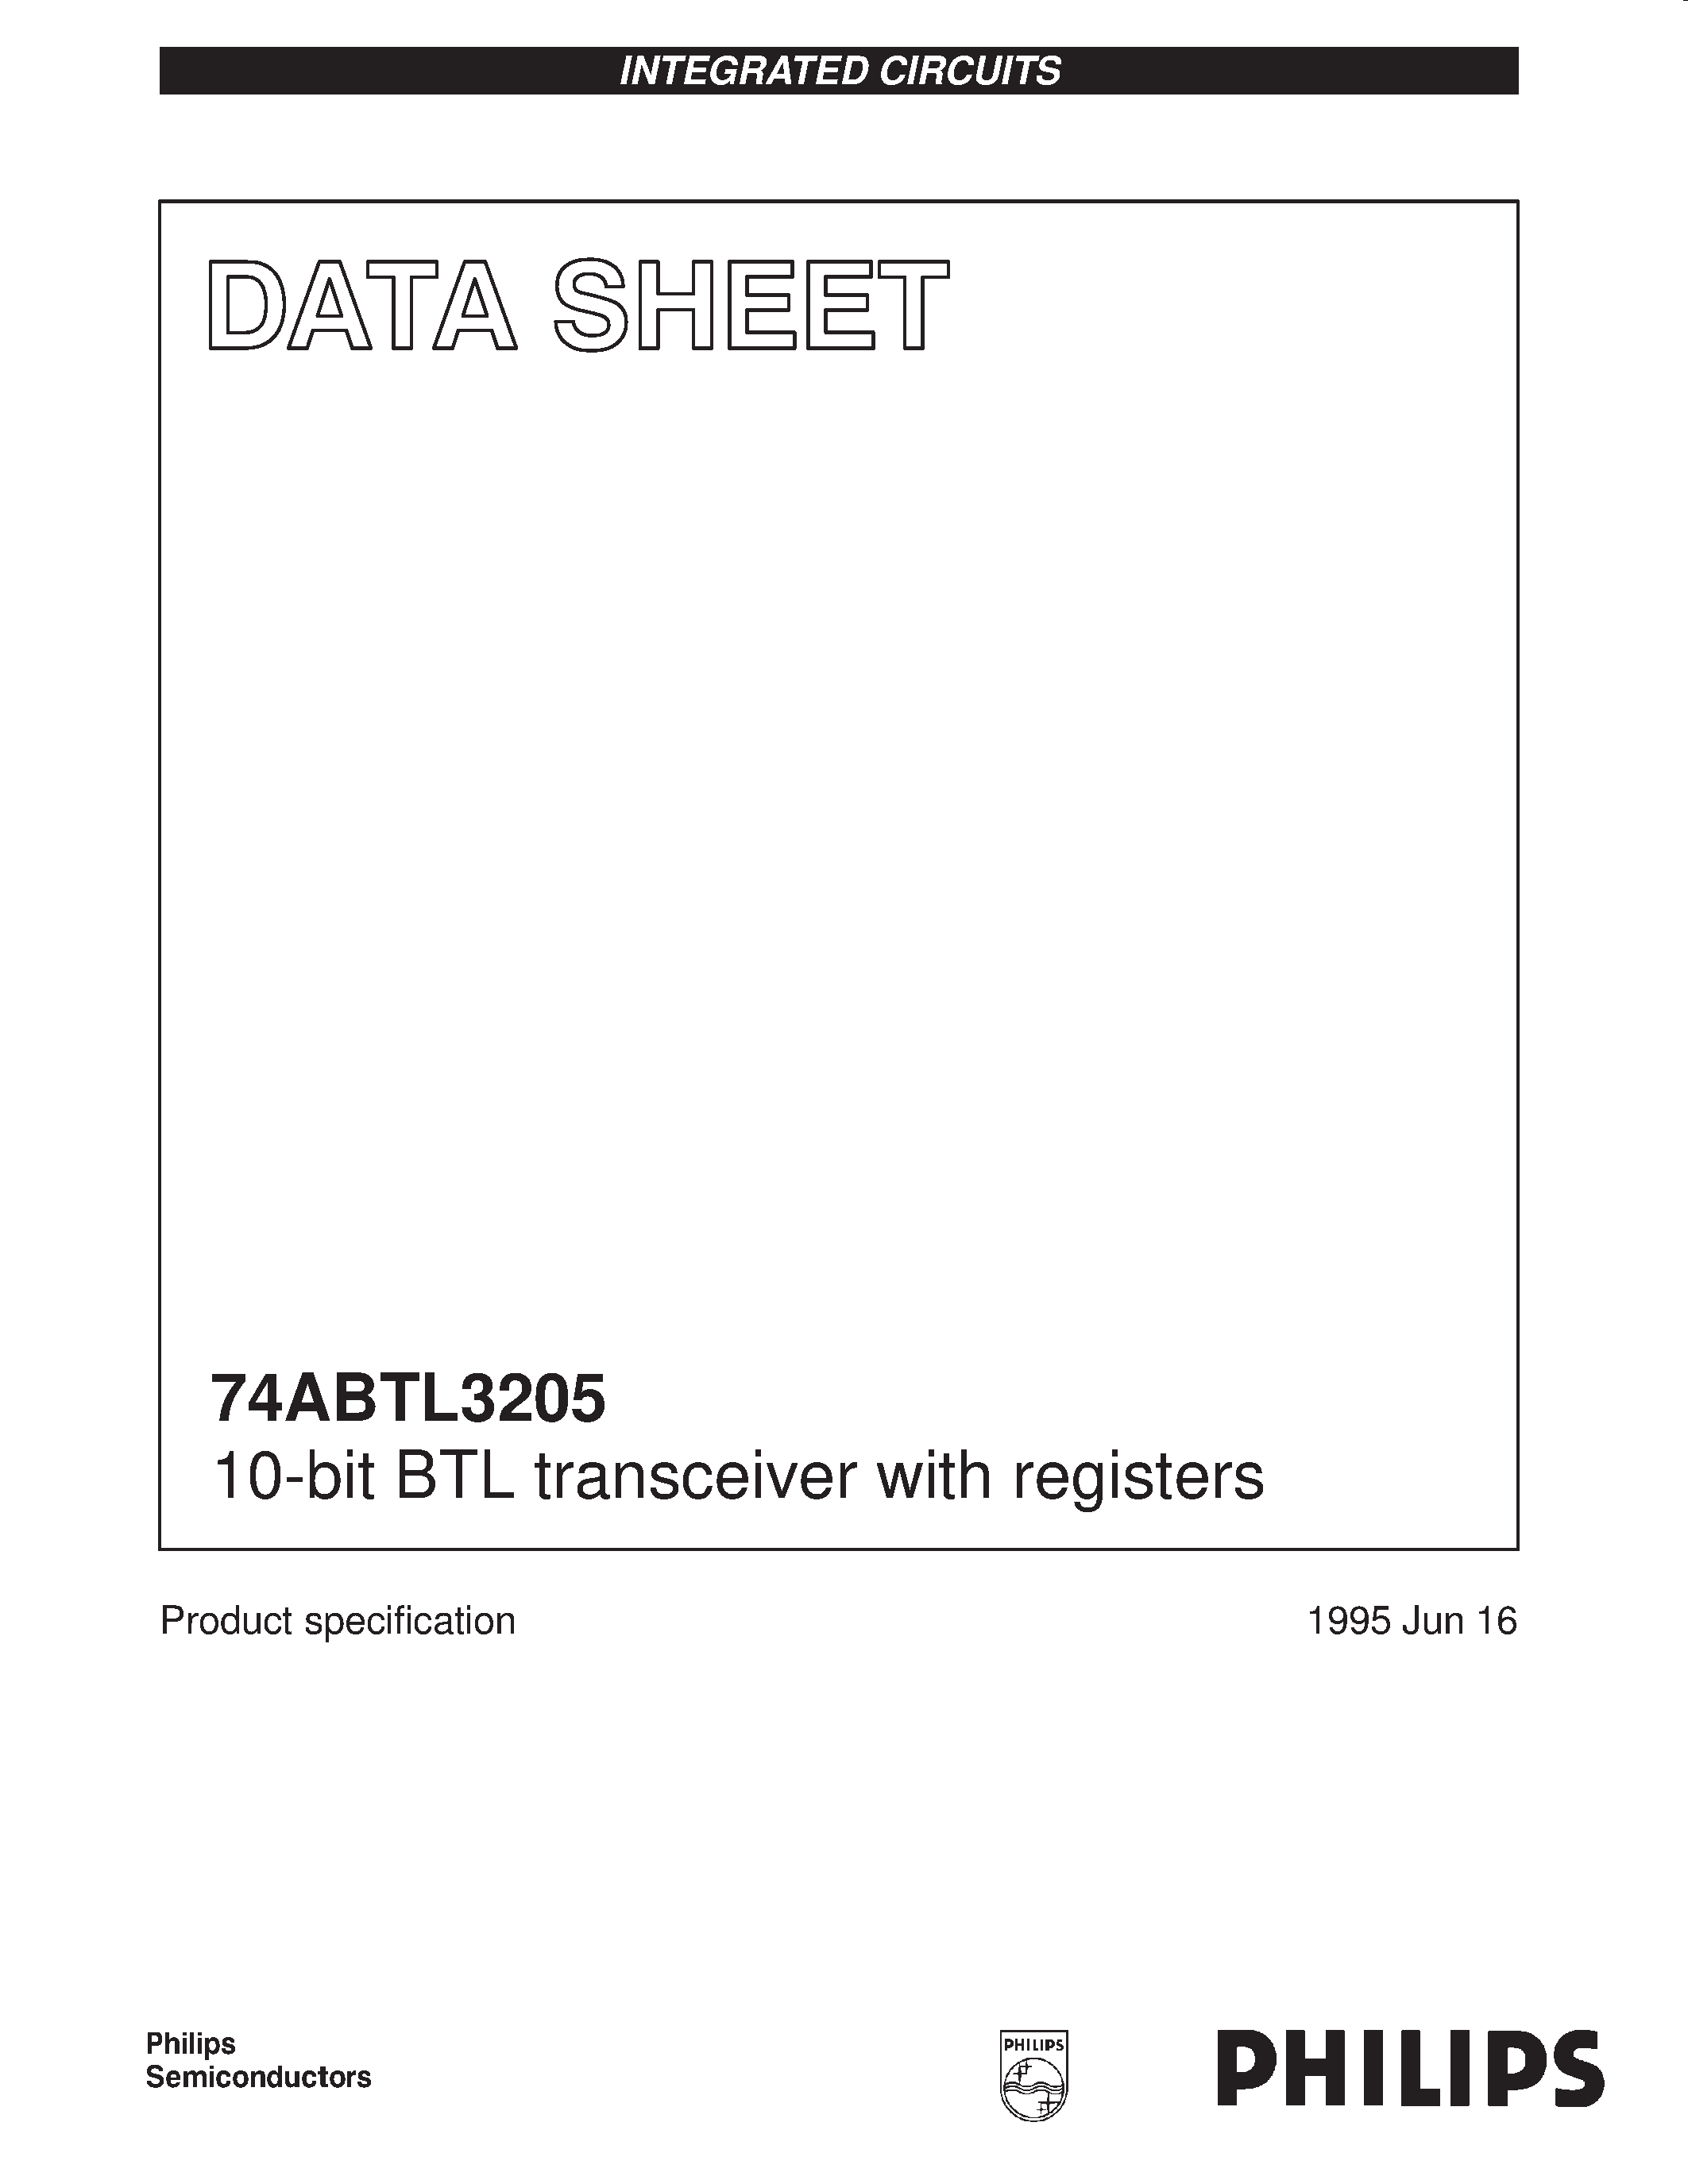 Даташит 74ABTL3205BB - 10-bit BTL transceiver with registers страница 1